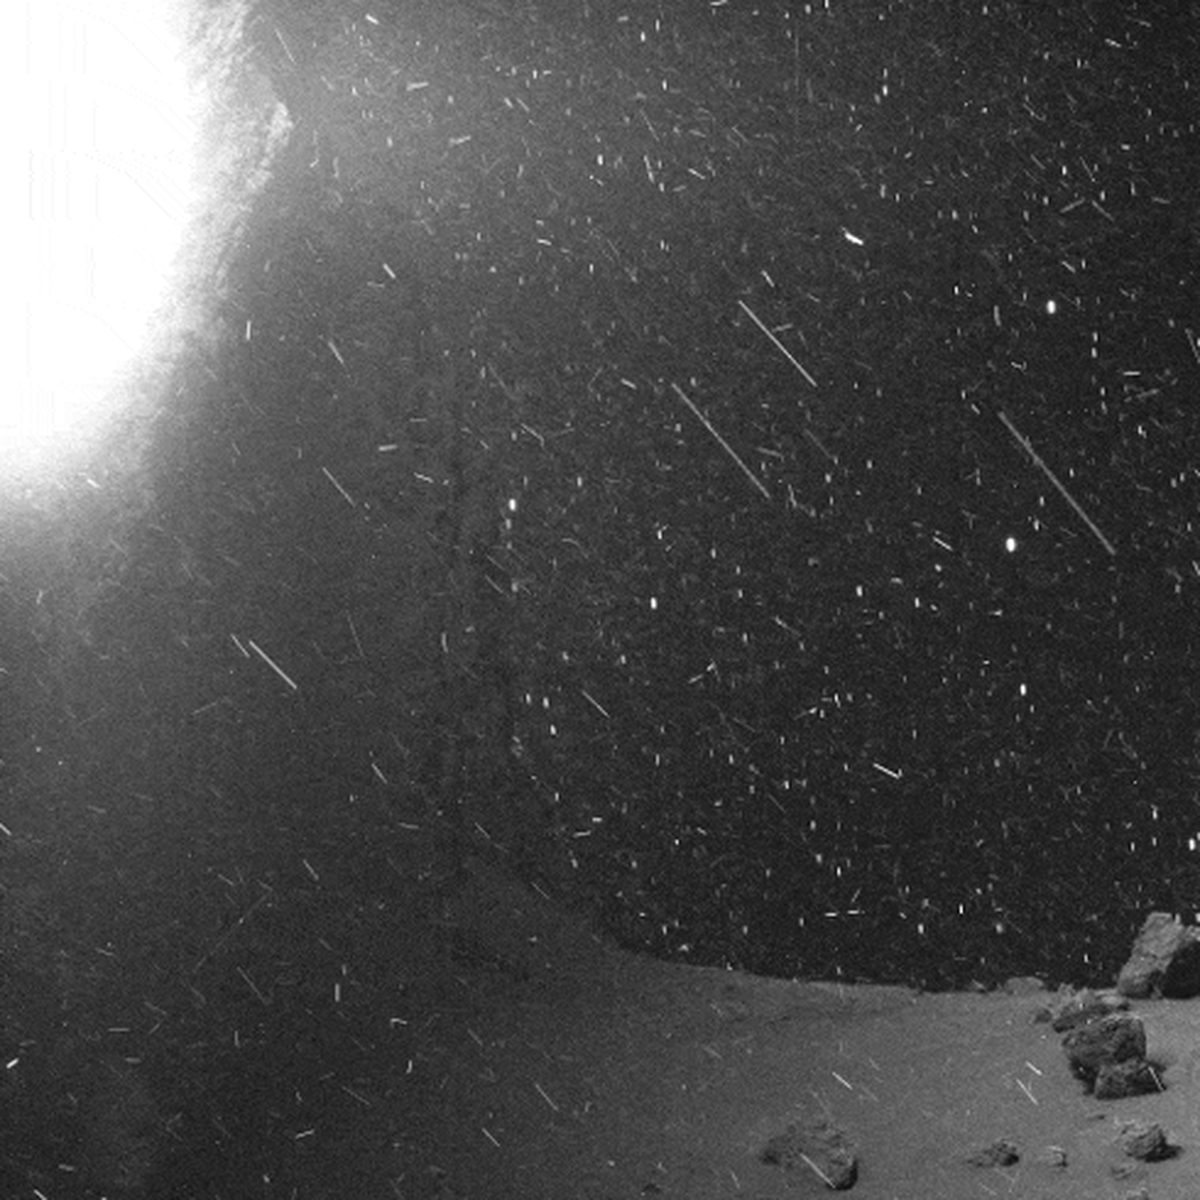 Rosetta movie from June 1, 2016 taken in 12.5 second exposures from 13 kilometers away.